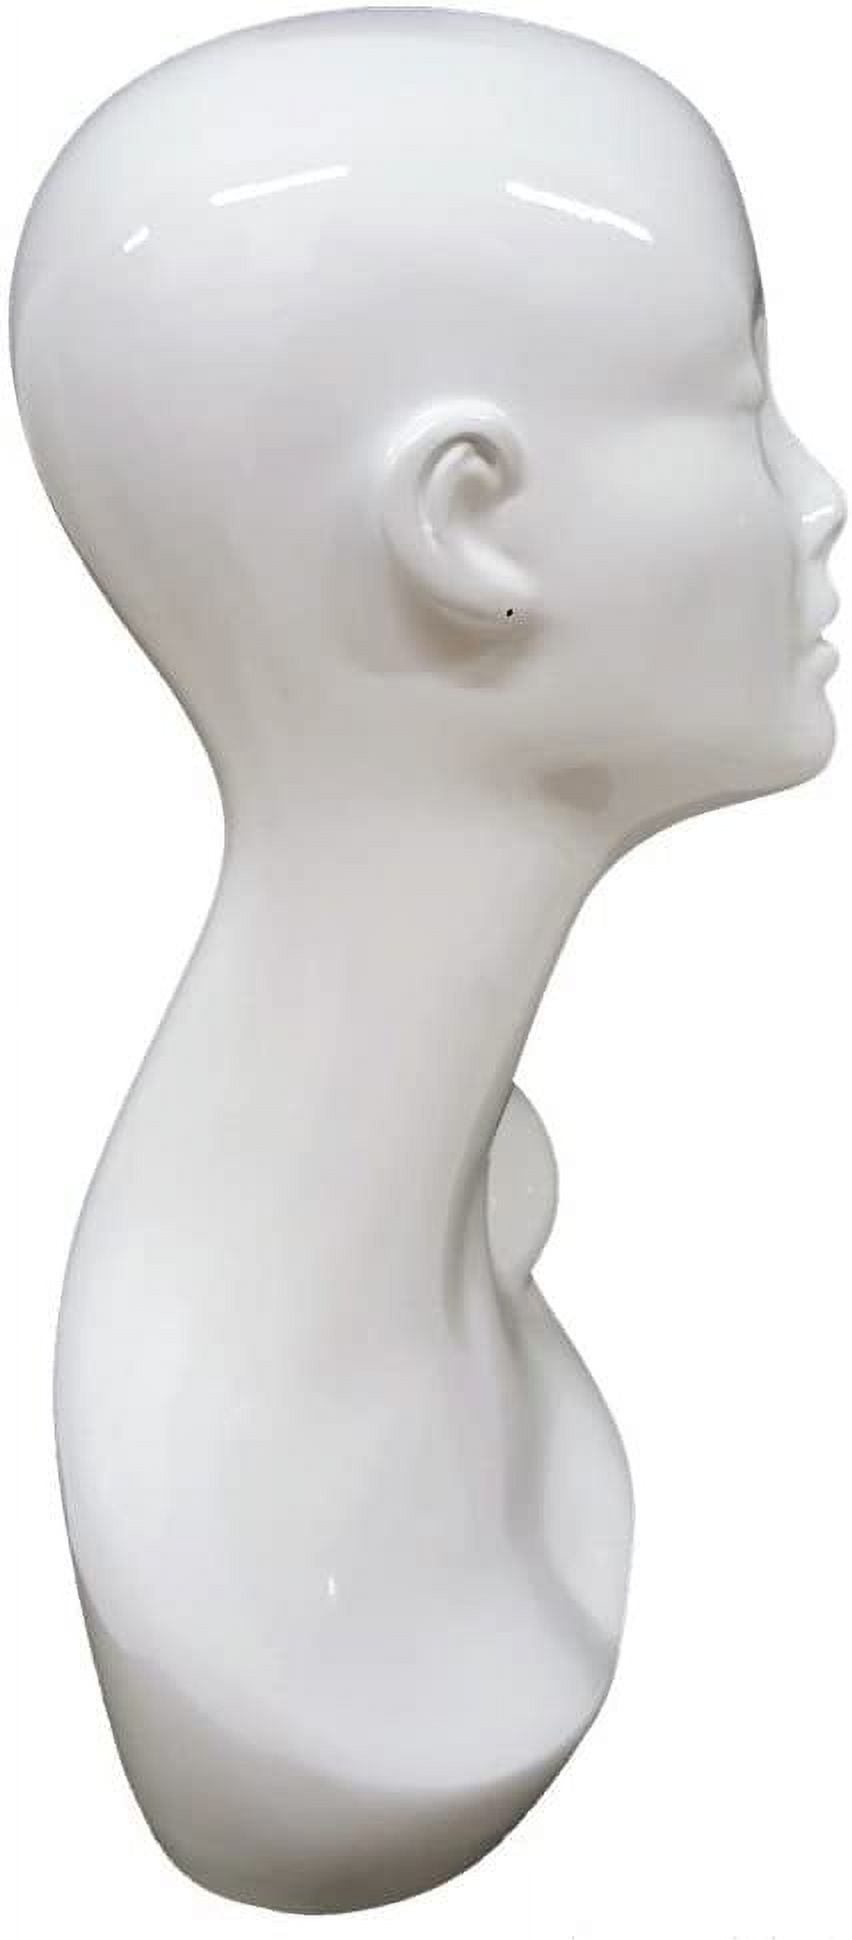 LASHVIEW Rubber Practice Training Head Manikin Cosmetology Mannequin Doll Face